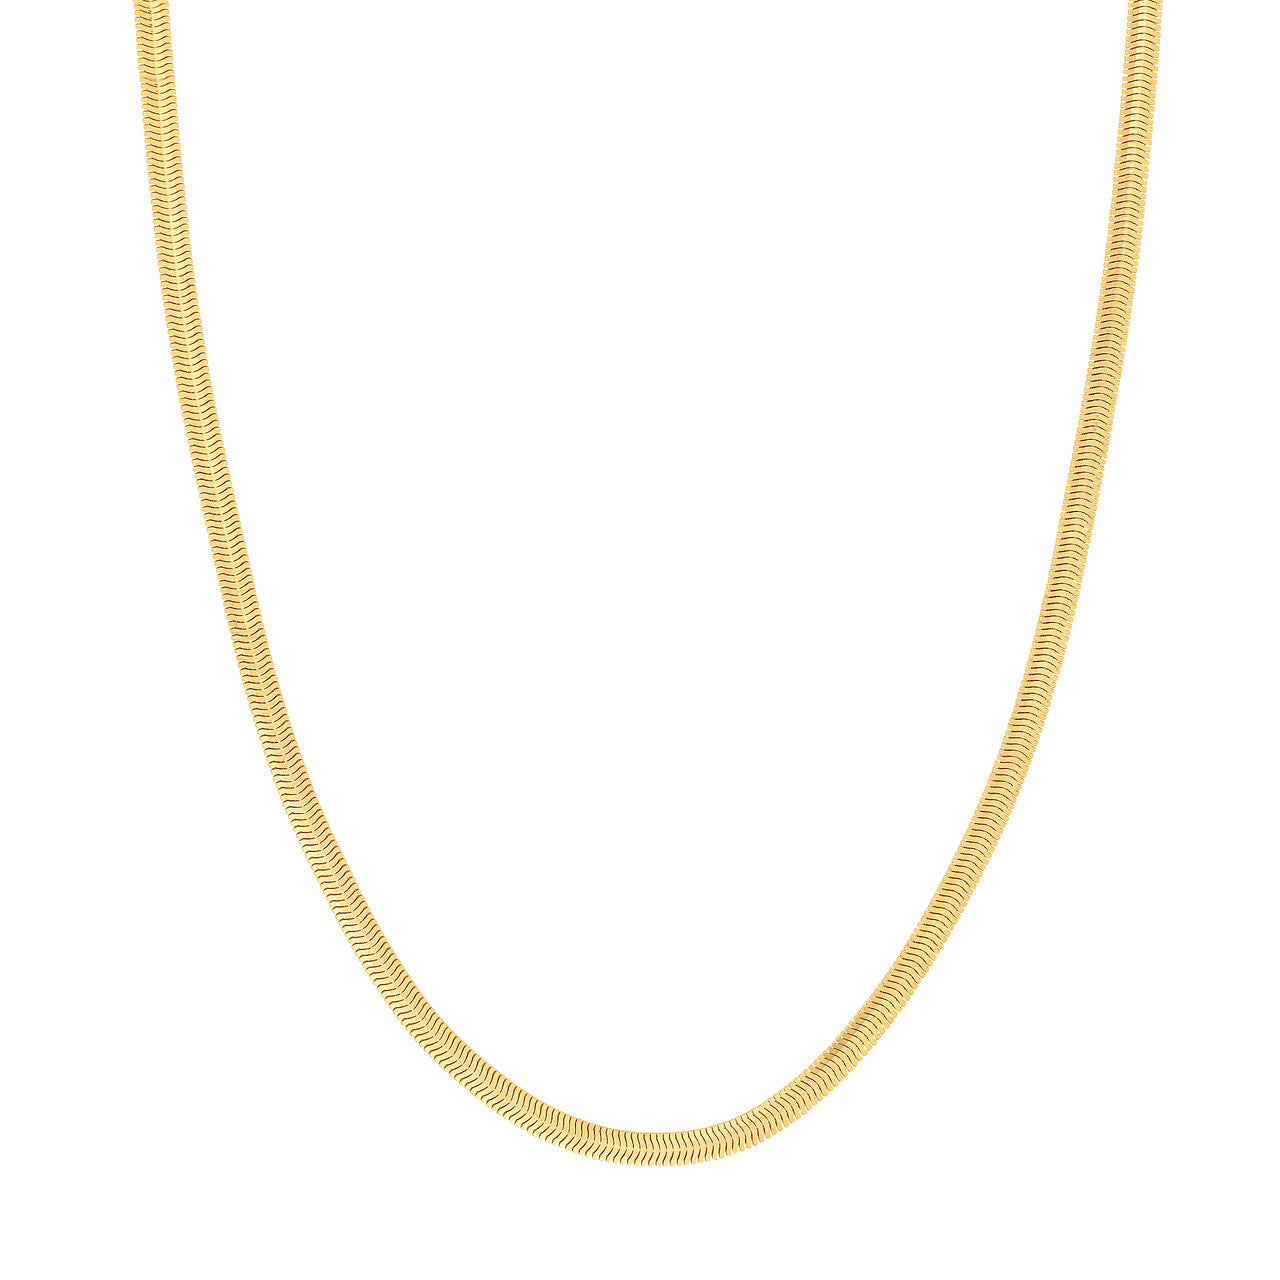 14k Yellow Gold Oval Snake Bracelet Anklet Choker Necklace Pendant Chain